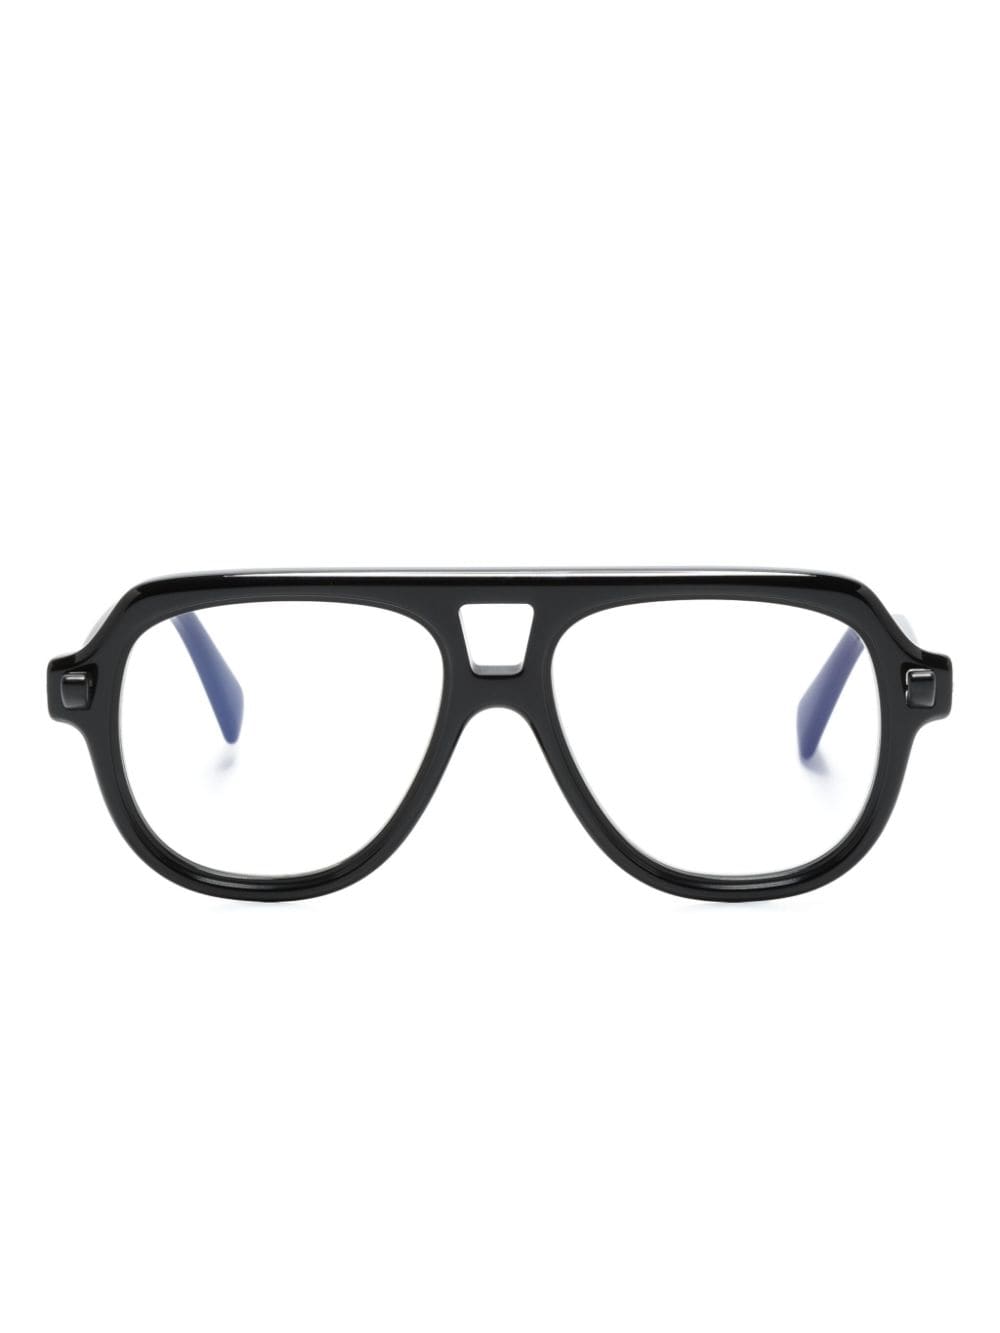 Q4 navigator-frame glasses